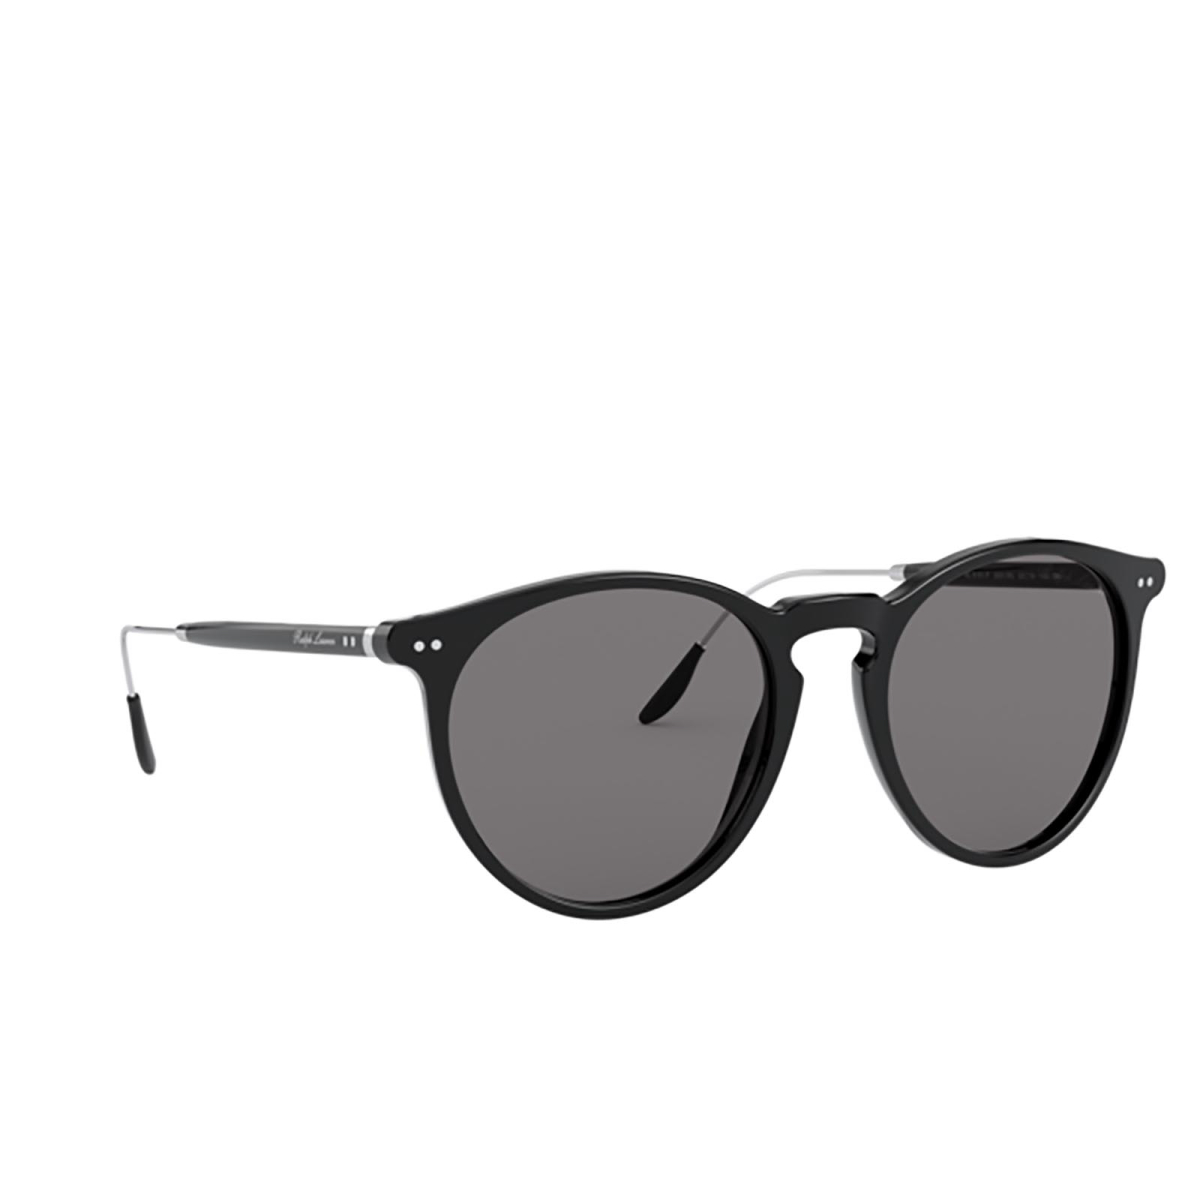 Ralph Lauren® Round Sunglasses: RL8181P color Shiny Black 5001R5 - three-quarters view.